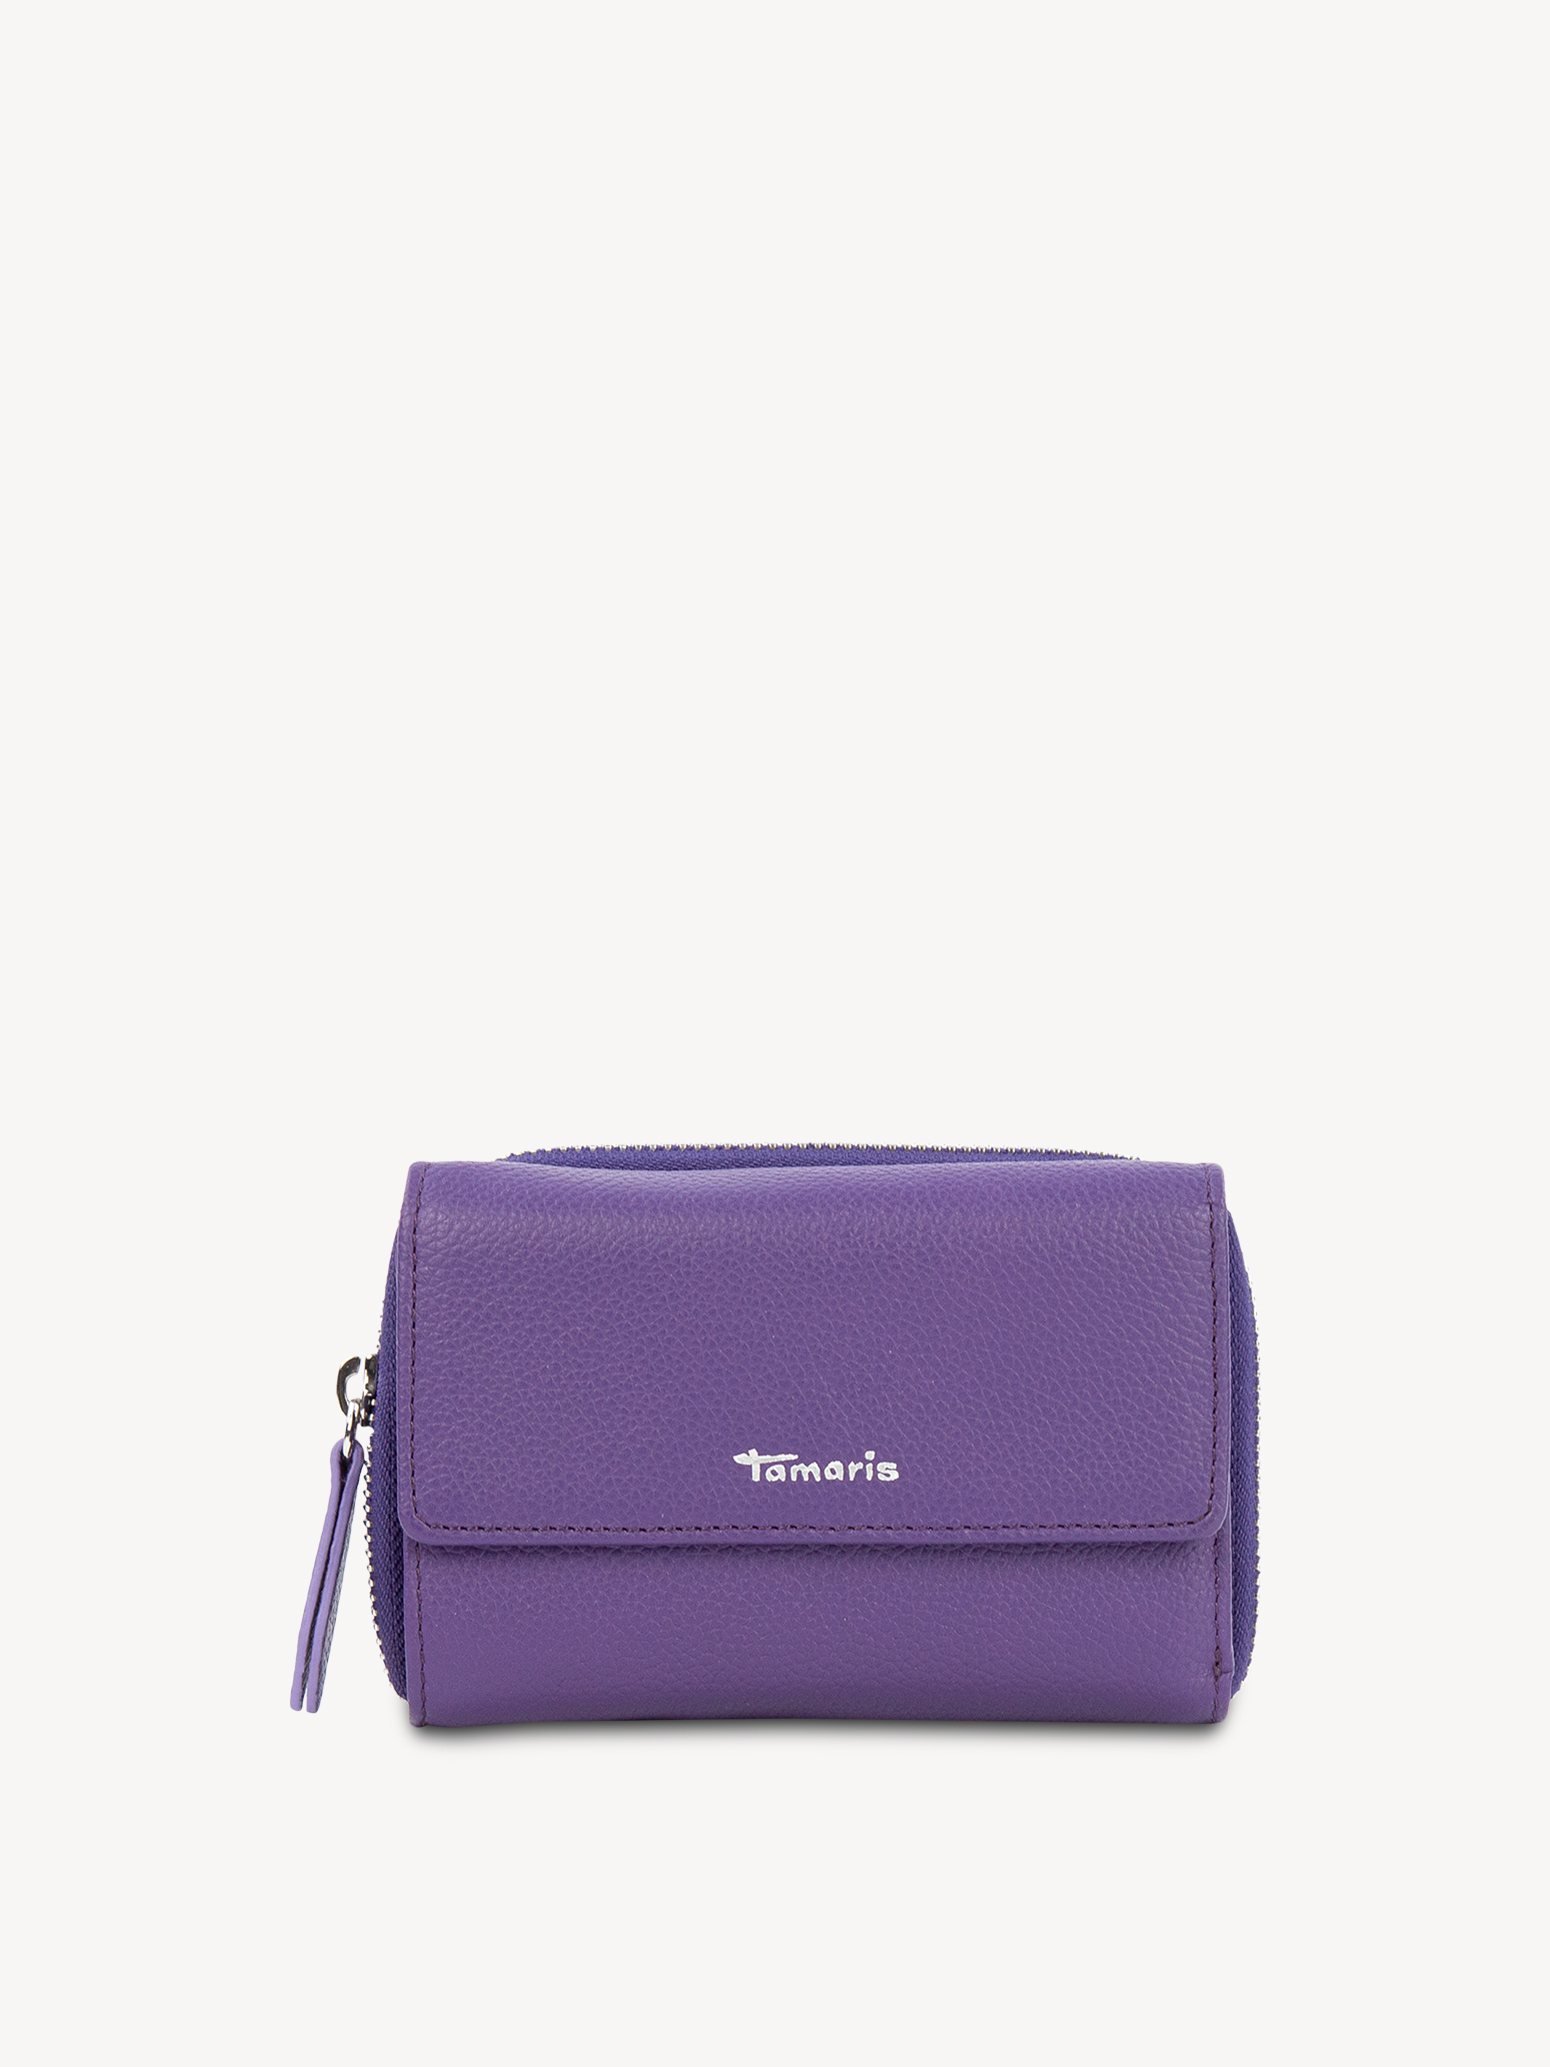 Leather Wallet - purple 50007-620: Buy Tamaris Purses & Cases online!